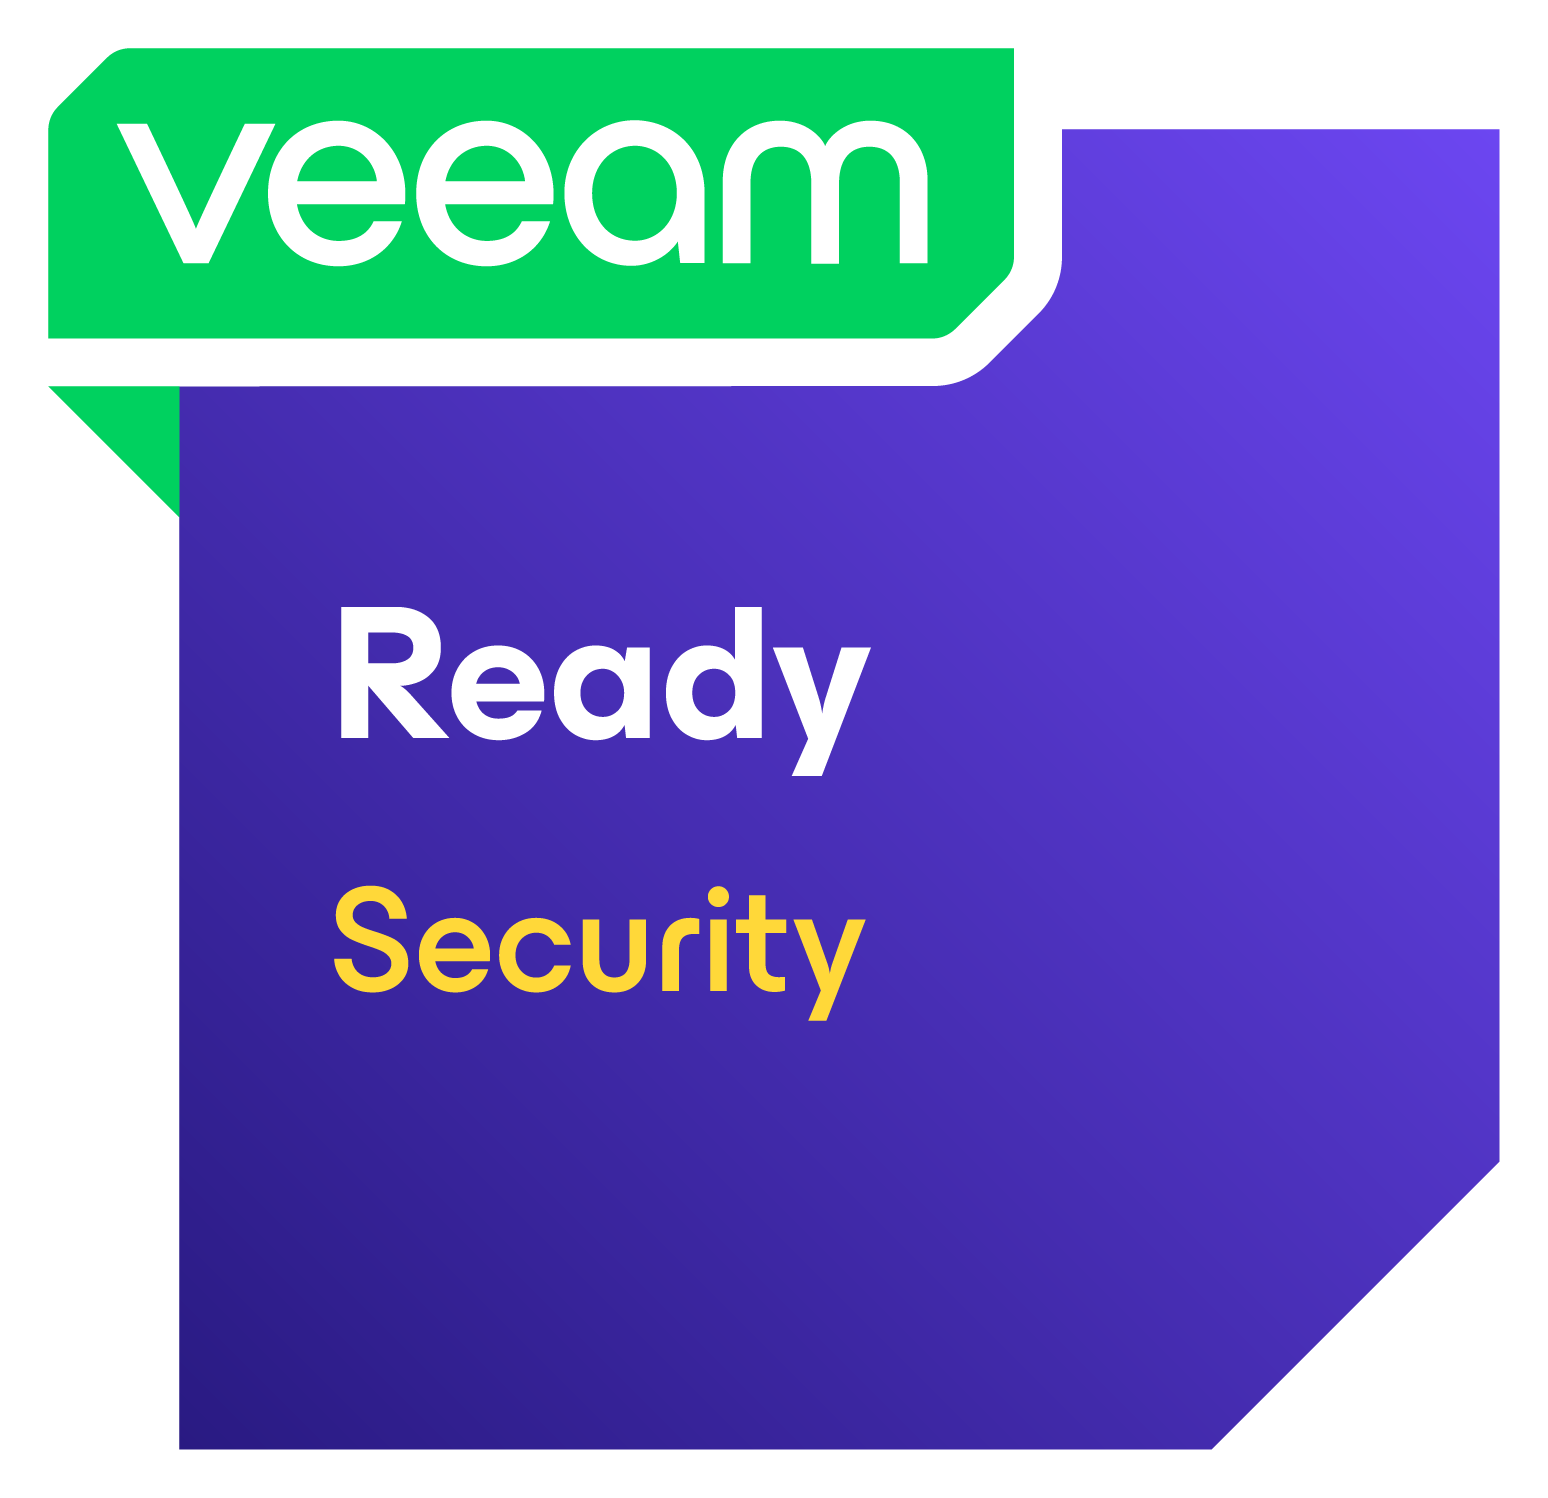 Veeam Ready - Security